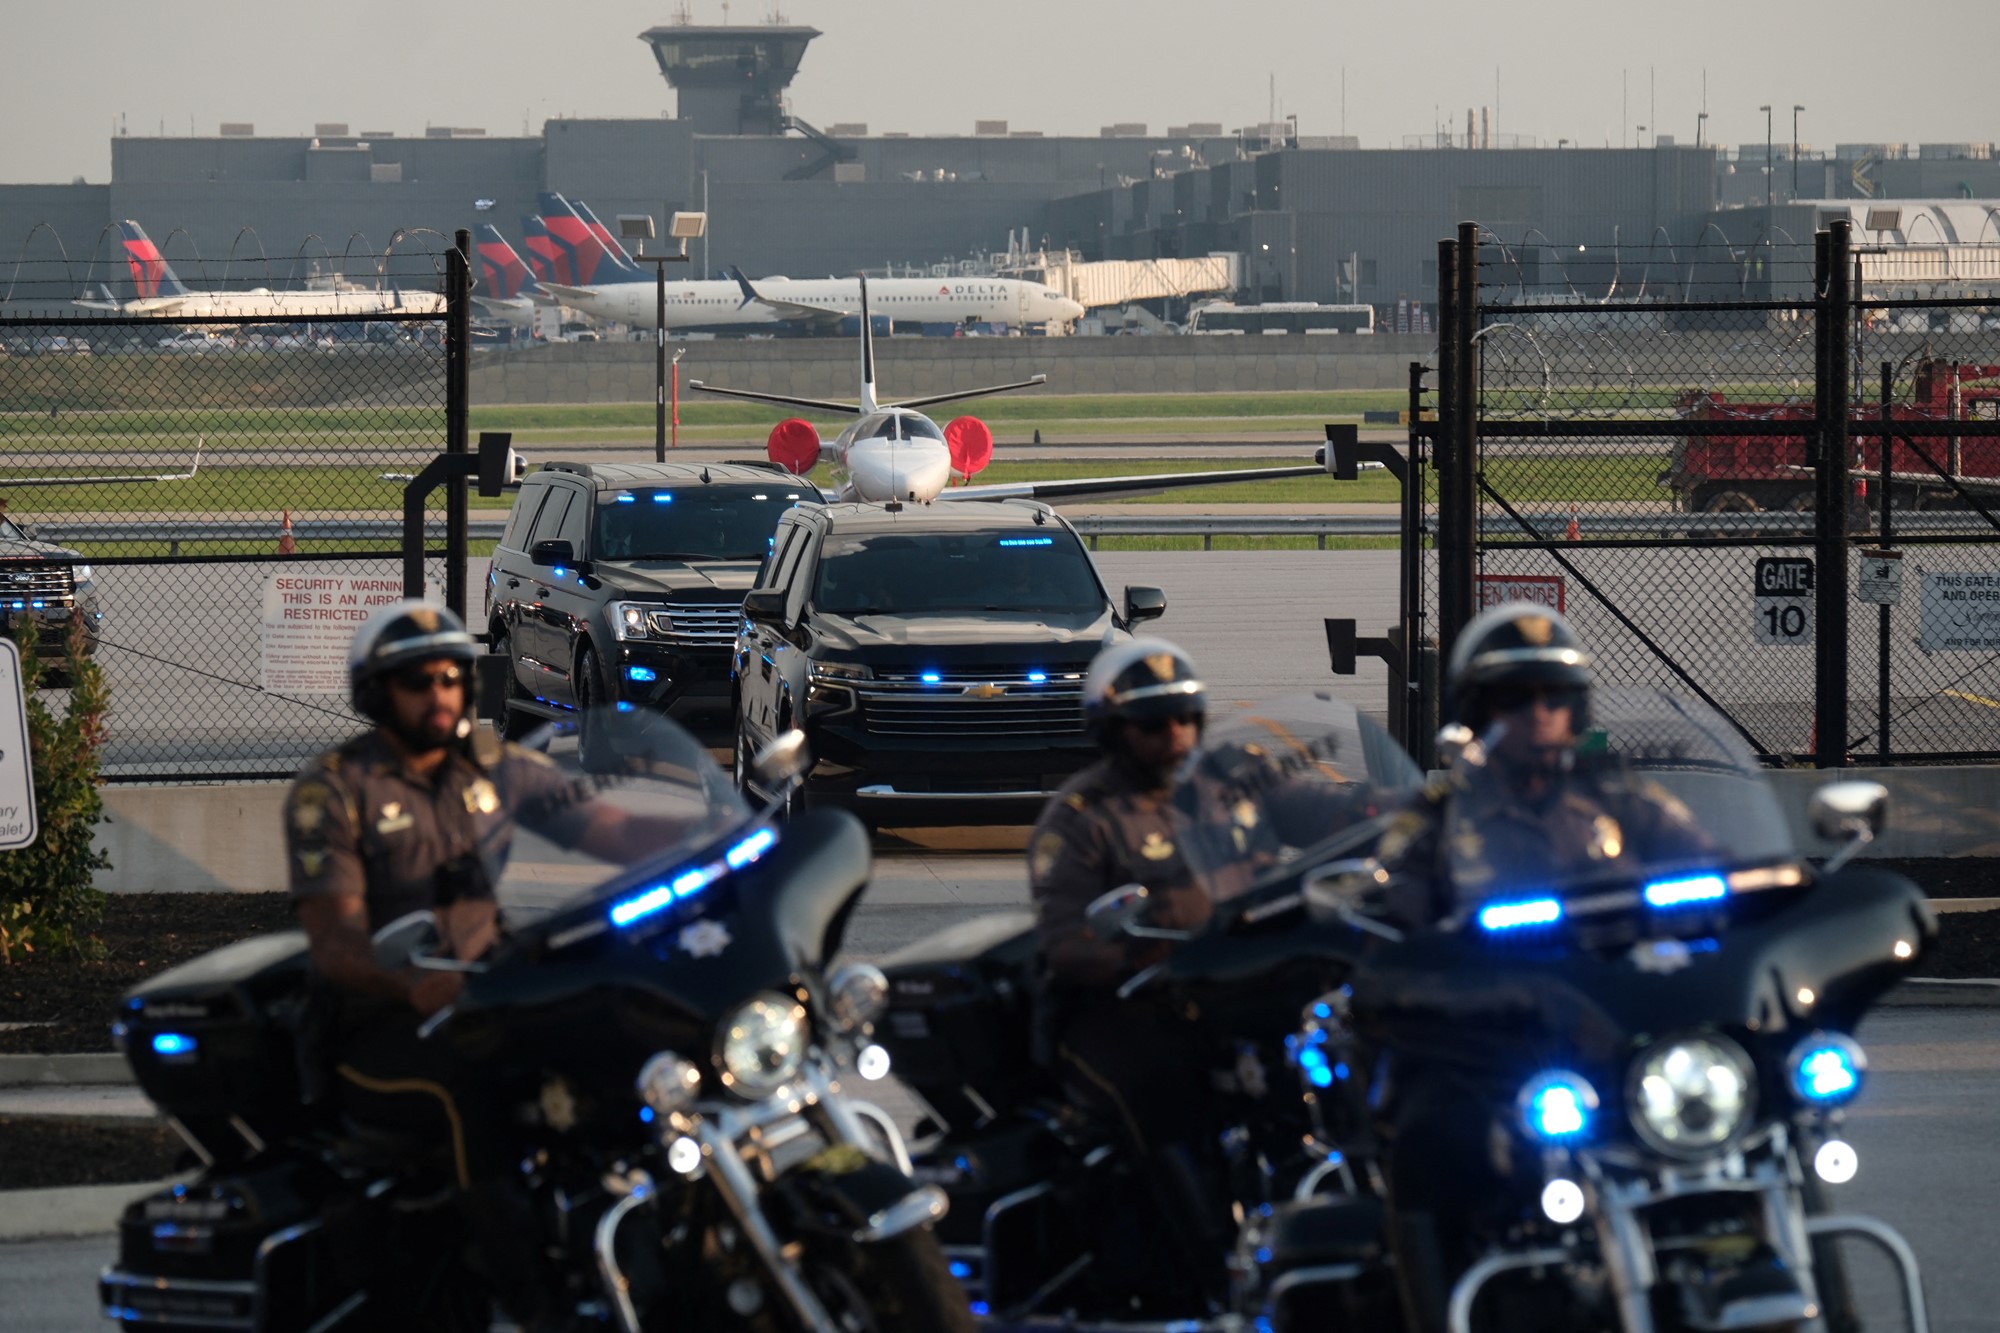 Members of security forces ride motorcycles as former U.S. President Donald Trump departs Atlanta Hartsfield-Jackson International Airport